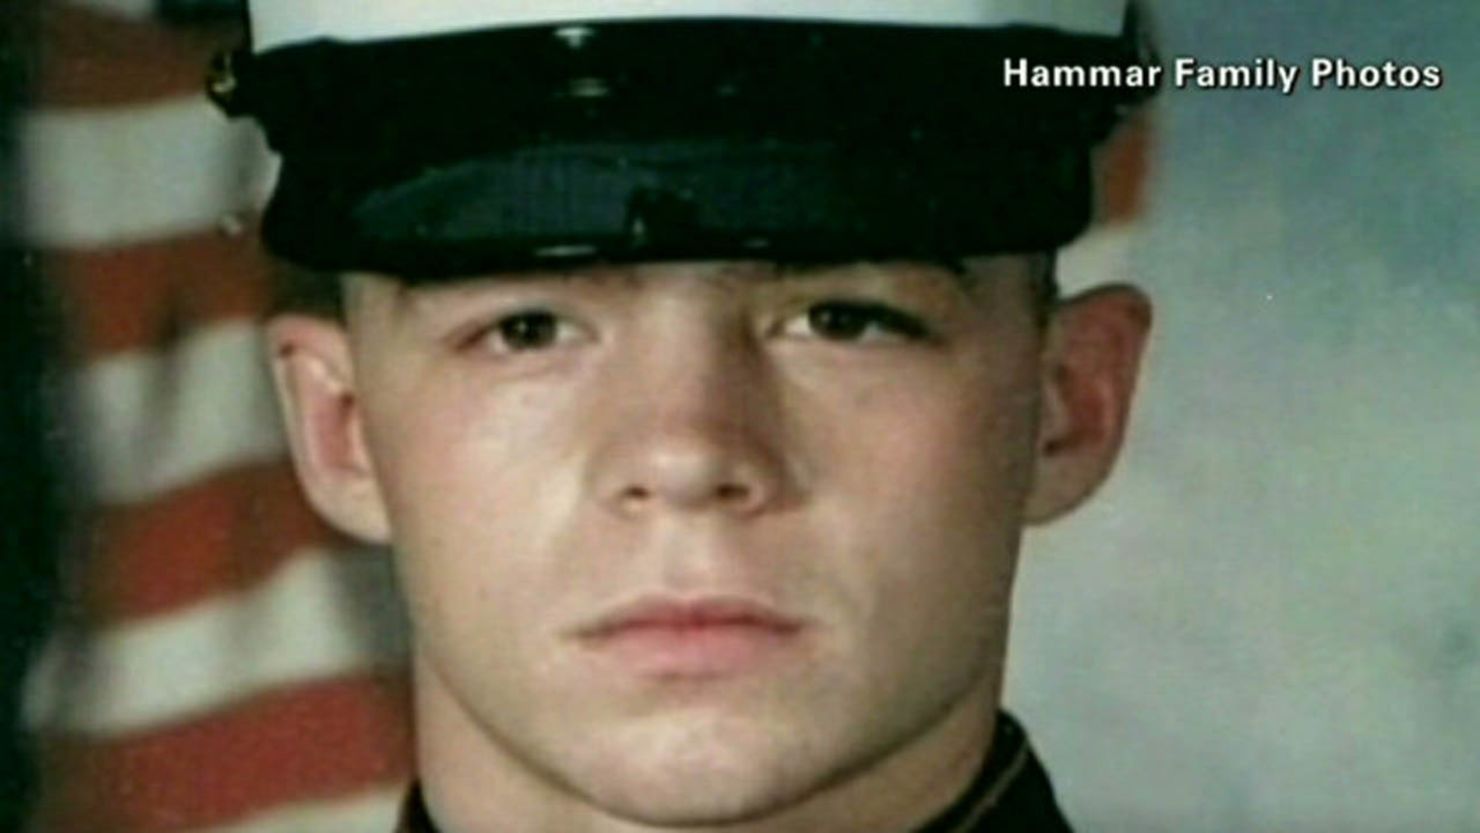 Former Marine Jon Hammar, 27, was back in the United States Friday night, said U.S. Rep. Ileana Ros-Lehtinen.